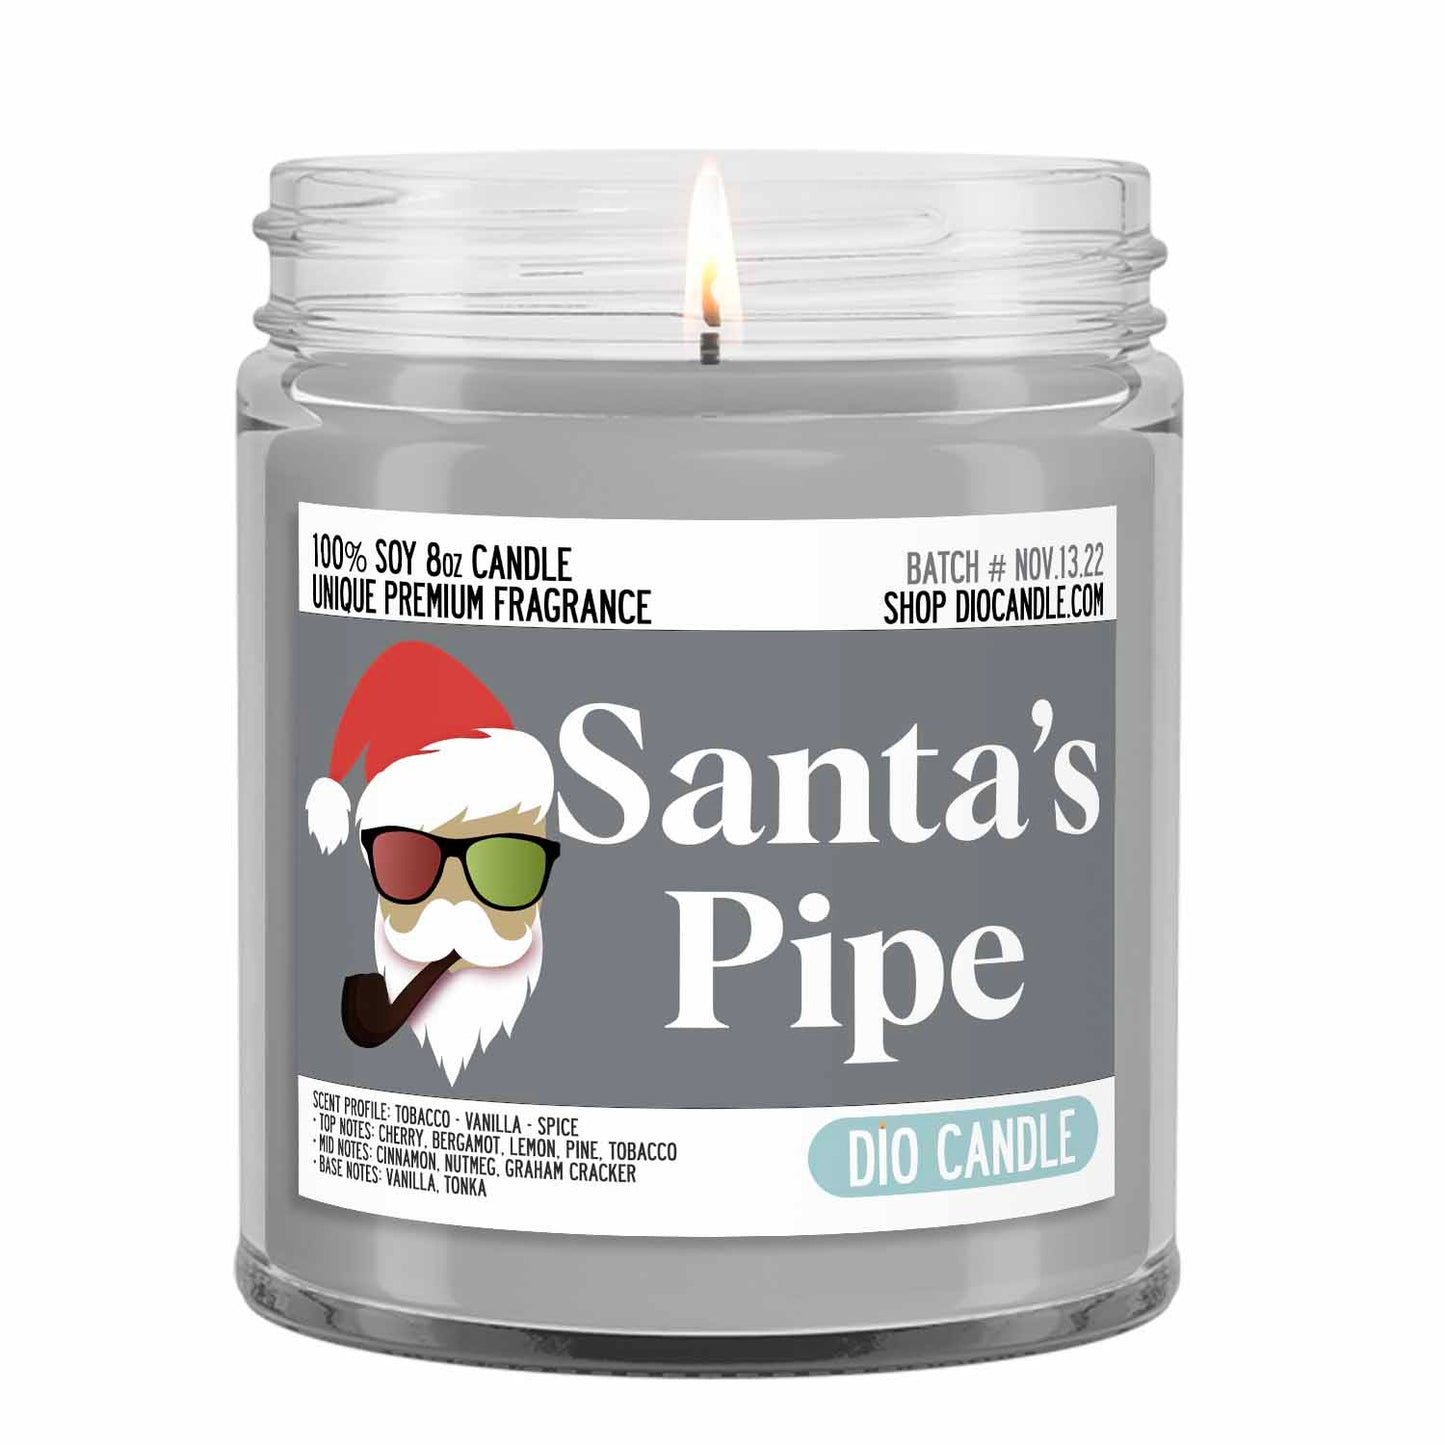 Santa's Pipe Candle